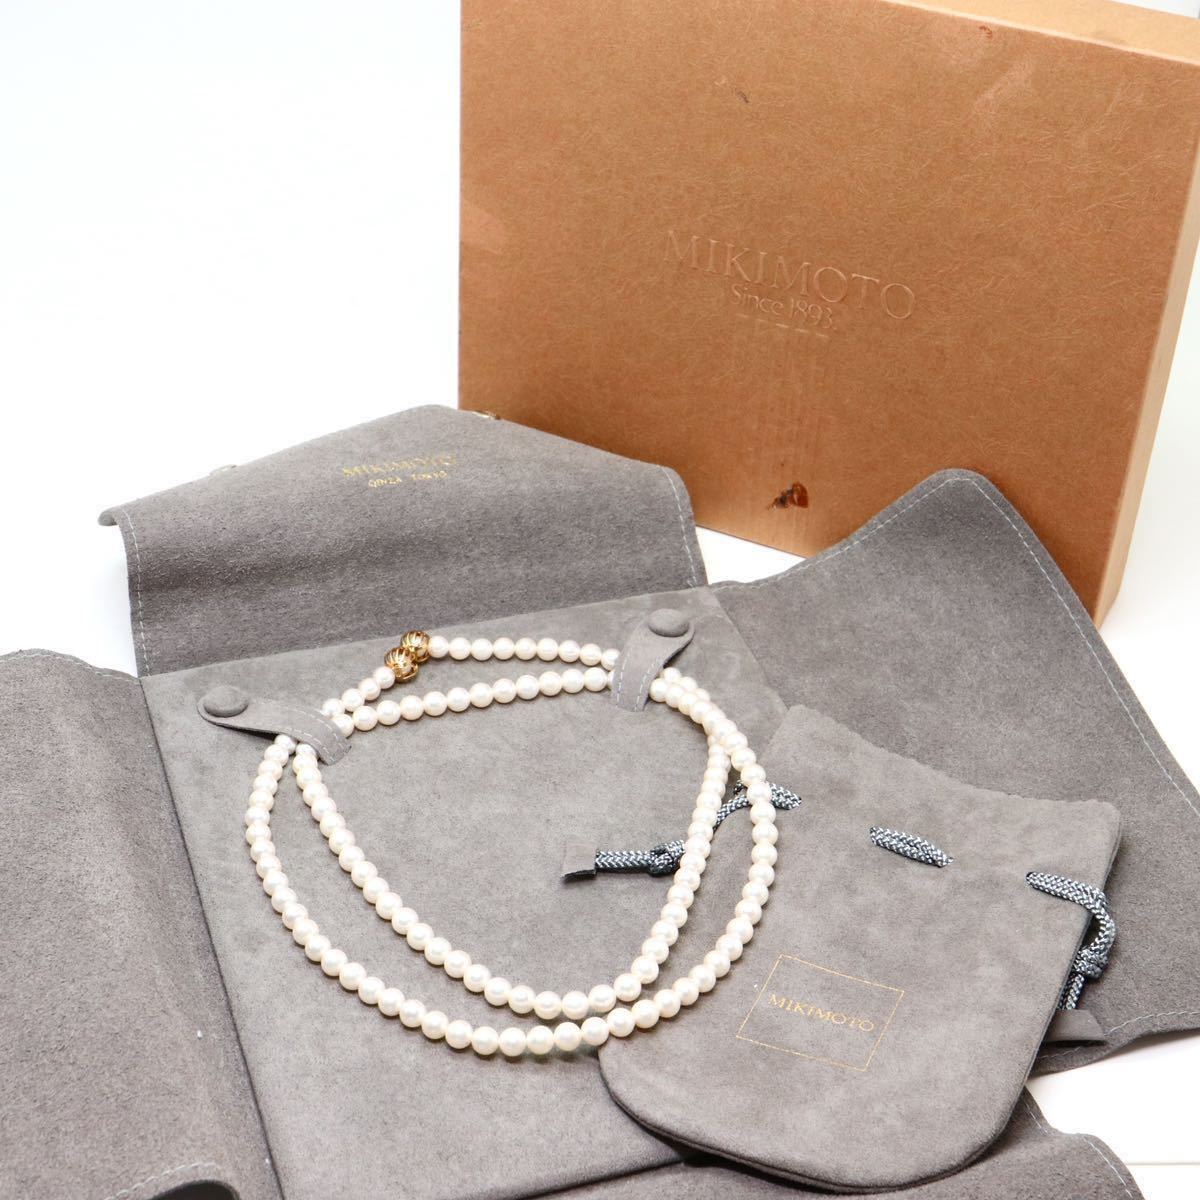 MIKIMOTO(ミキモト)箱付き!!《アコヤ本真珠ロングネックレス》F 約6.0-6.5mm珠 約46.0g 約78.5cm pearl necklace jewelry EB0/EG0の画像1